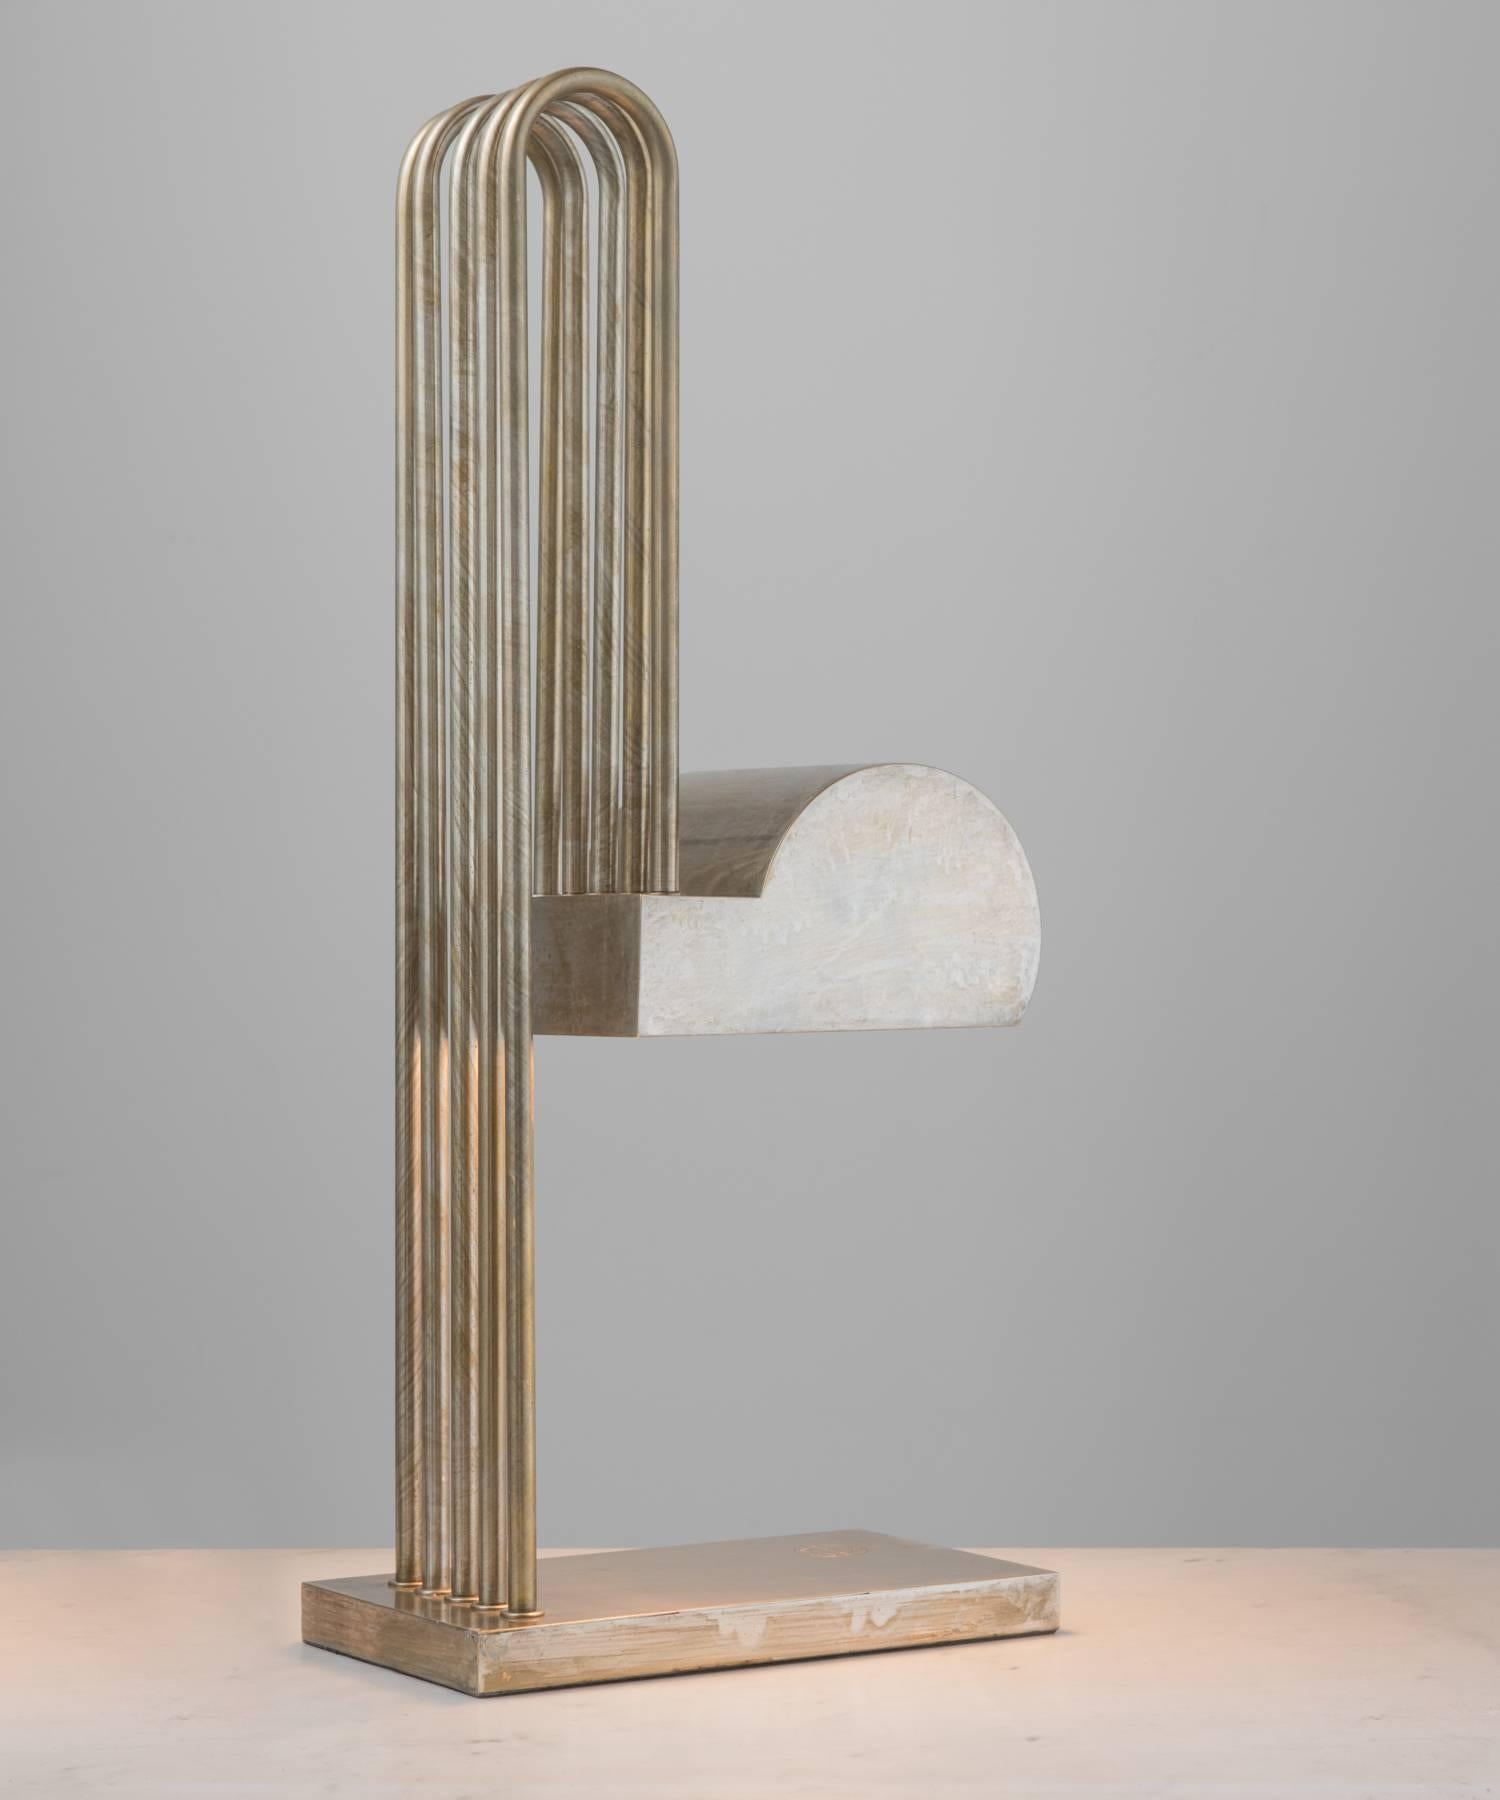 Bauhaus Marcel Breuer Desk Lamp, circa 1925